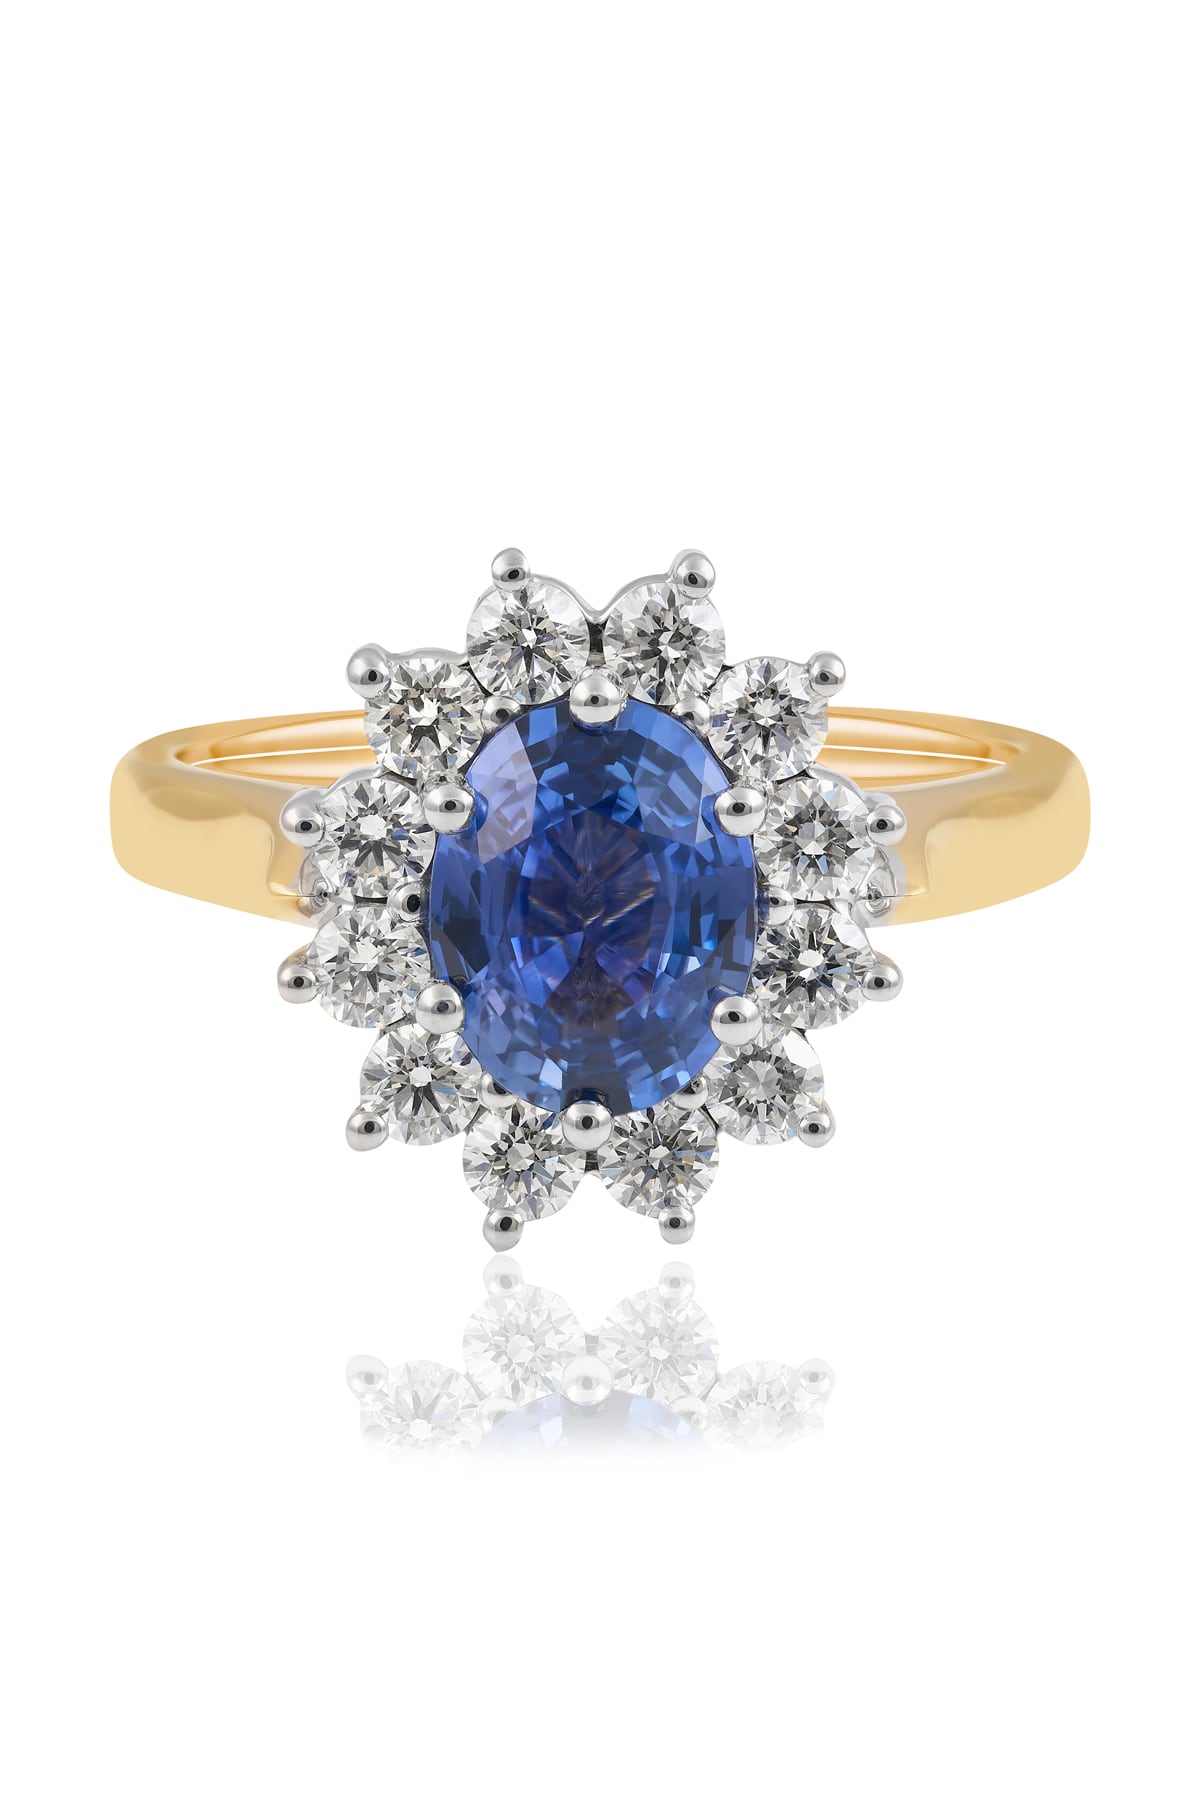 1.91 Carat Oval Ceylon Sapphire & Diamond Cluster Ring from LeGassick Jewellery.